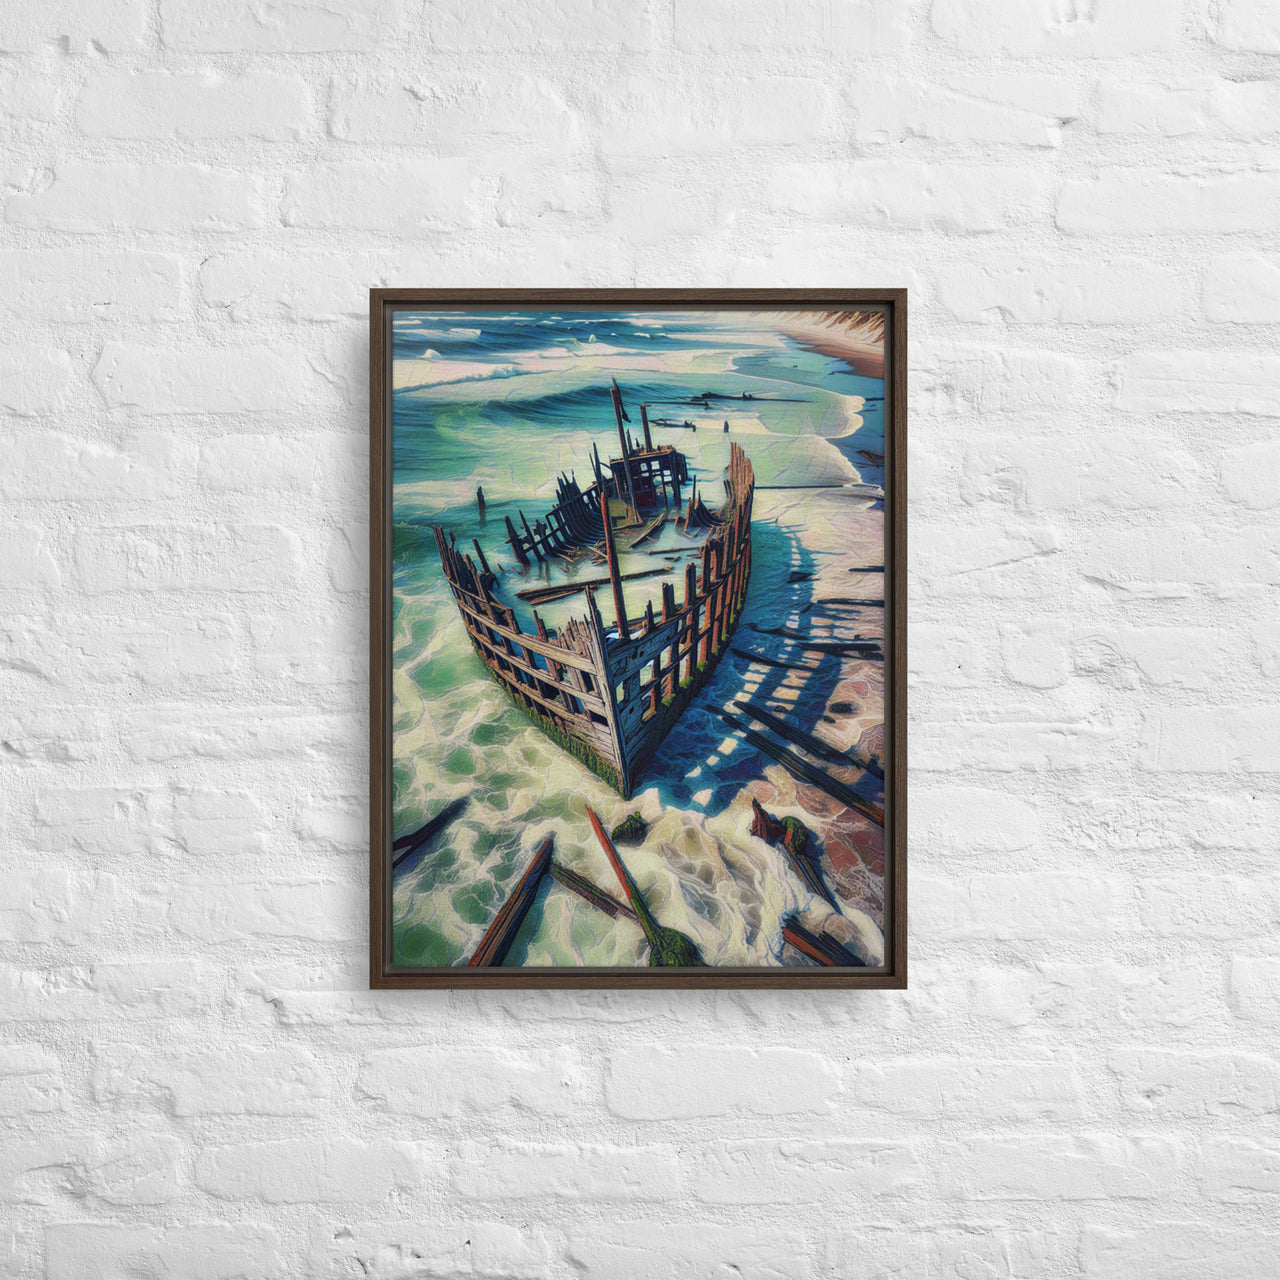 Ship Wreck on the Oregon Coast - Digital Art - Framed canvas - FREE SHIPPING